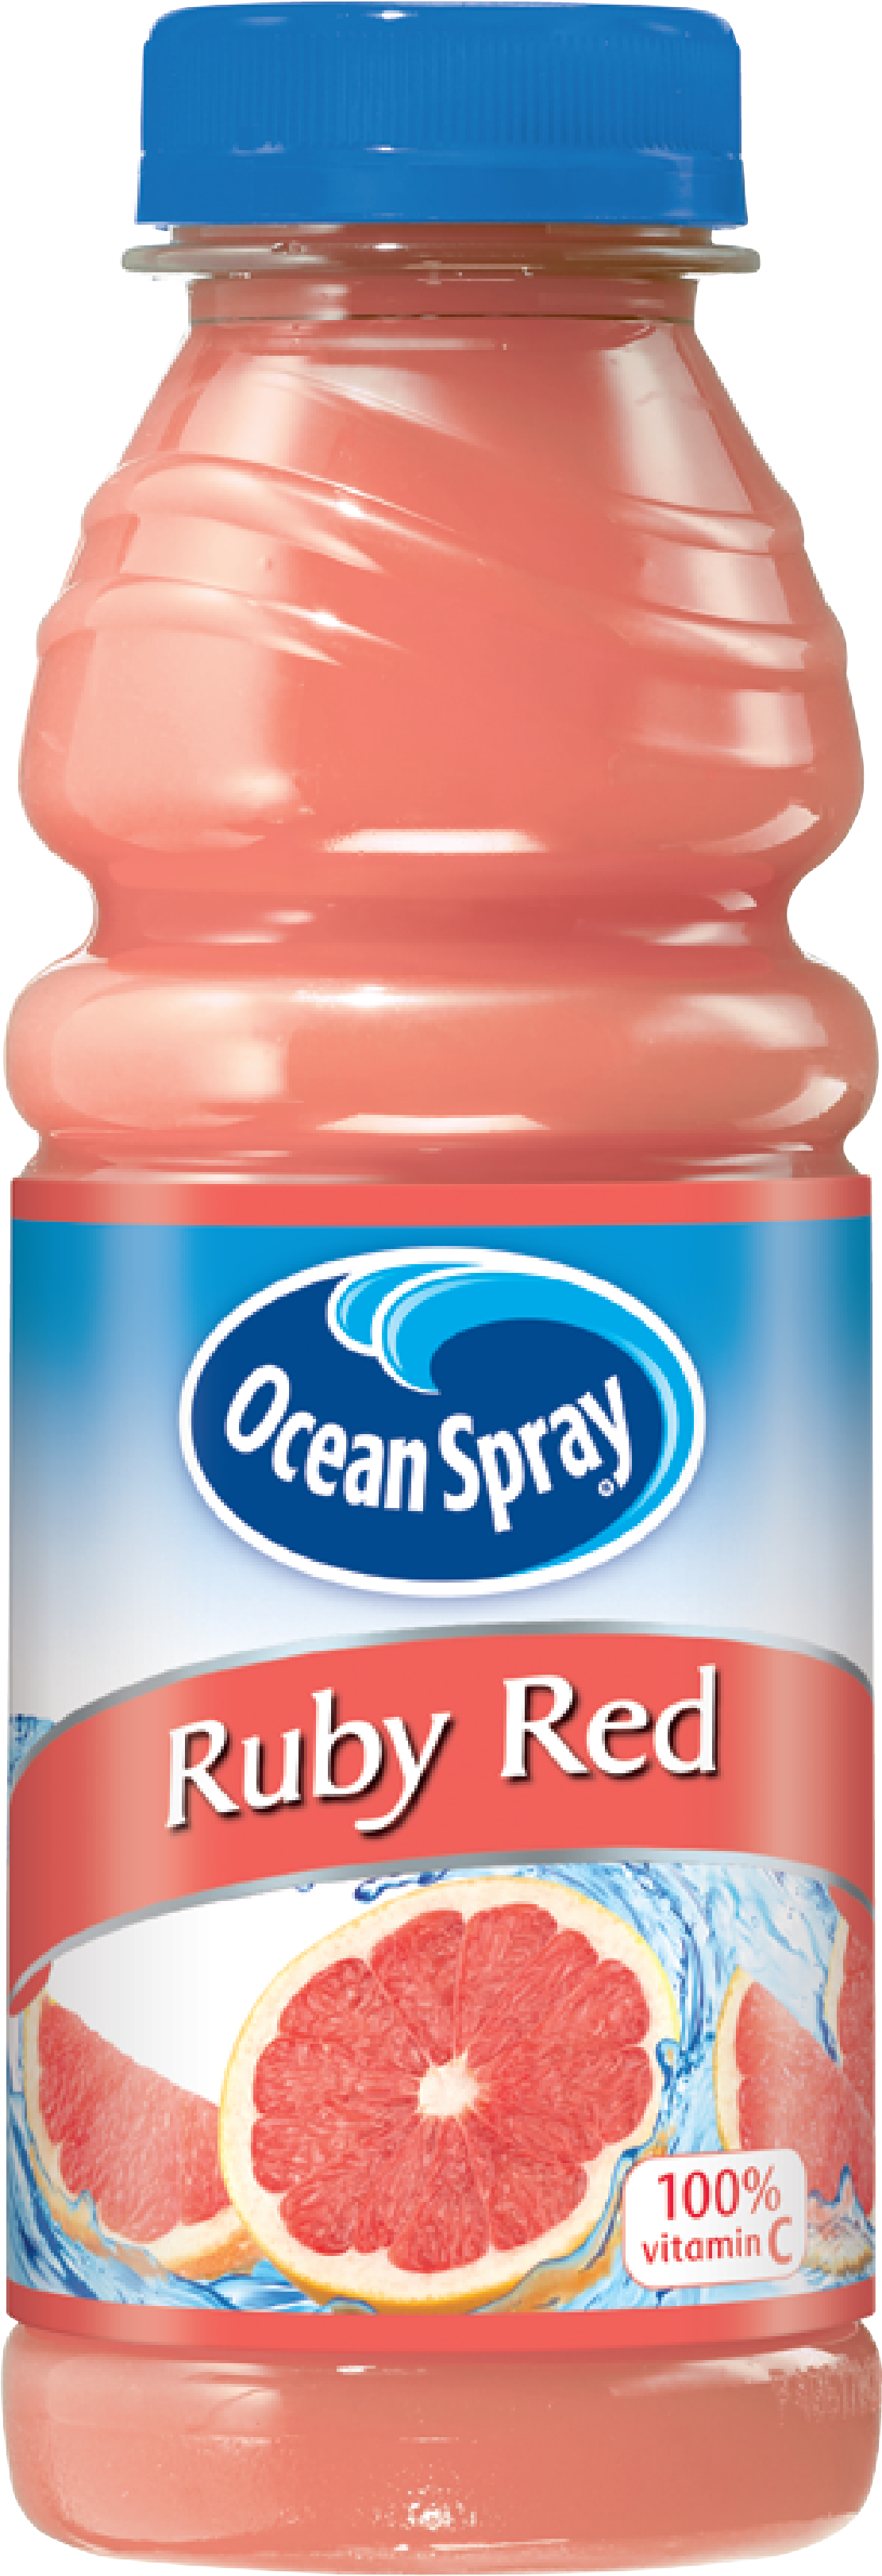 Cranberry Juice PNG HD Quality